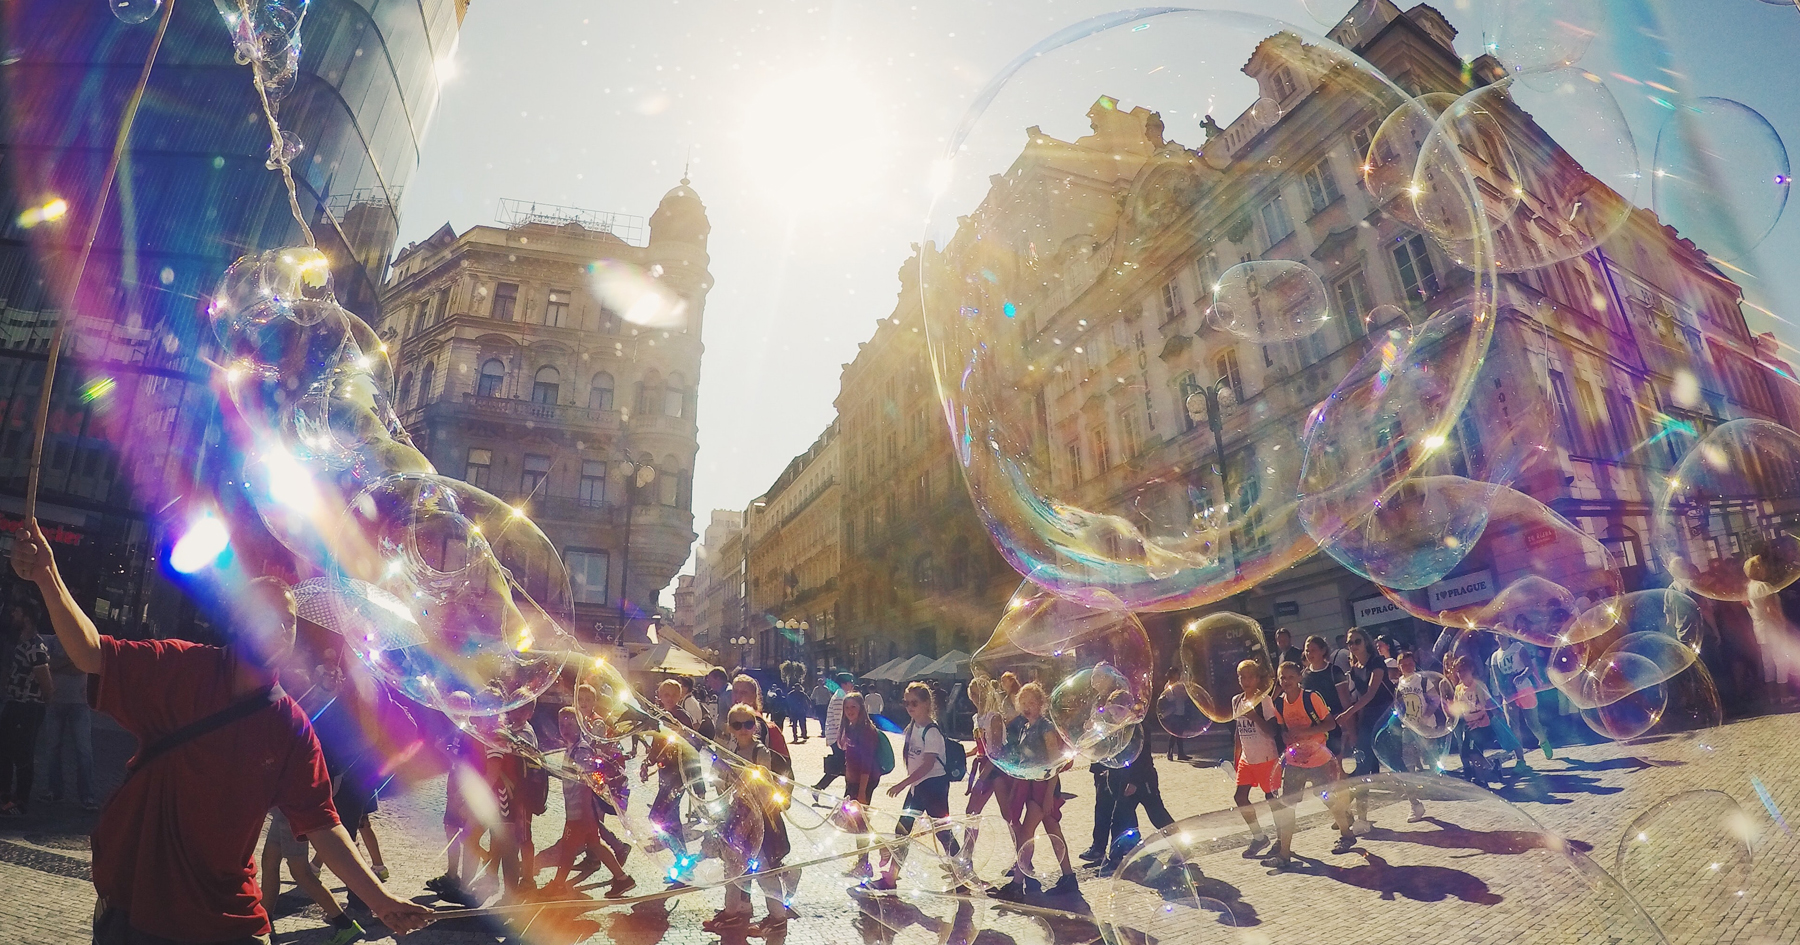 Children blowing large bubbles in a public square in Prague.